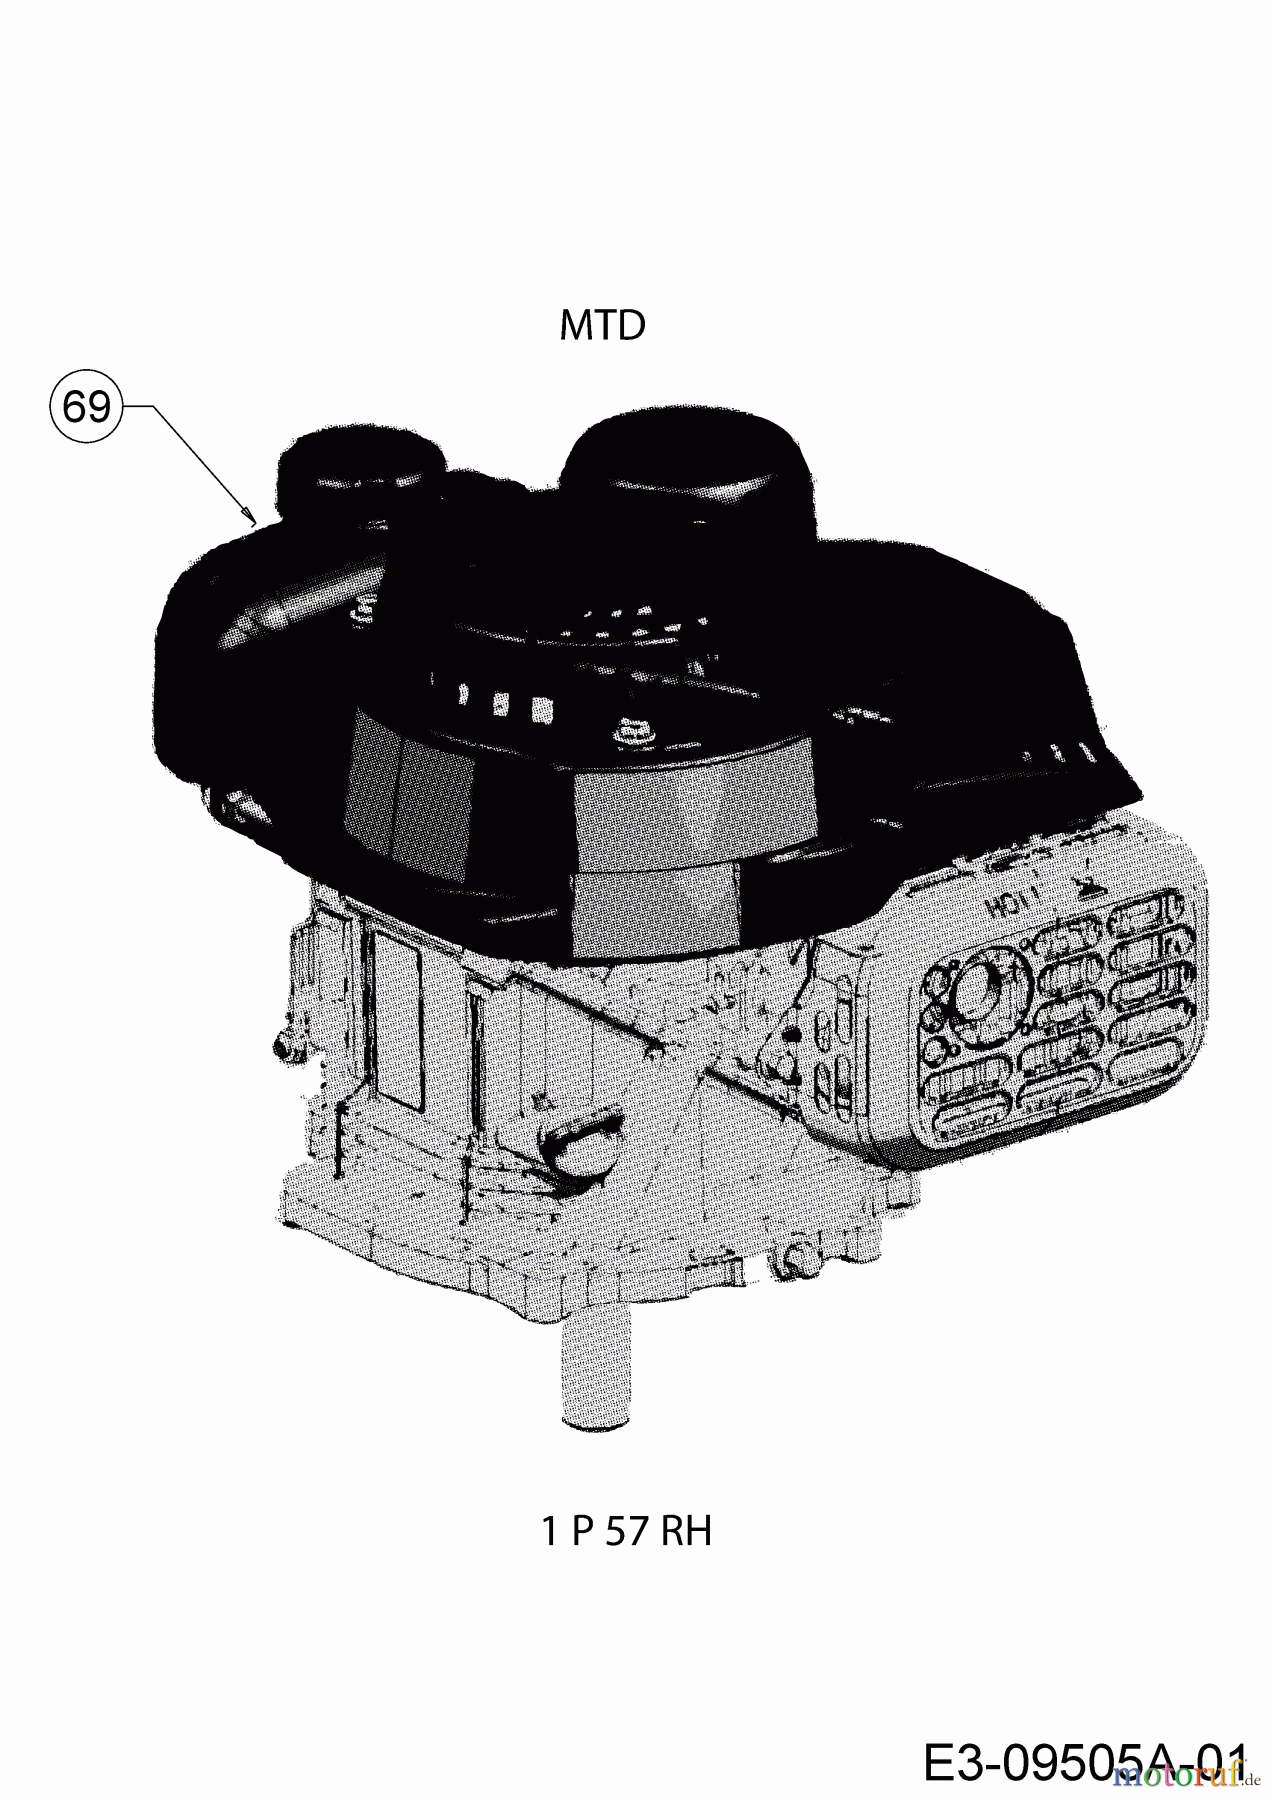  MTD Petrol mower Smart 395 PO 11CBB1SJ600 (2019) Engine MTD